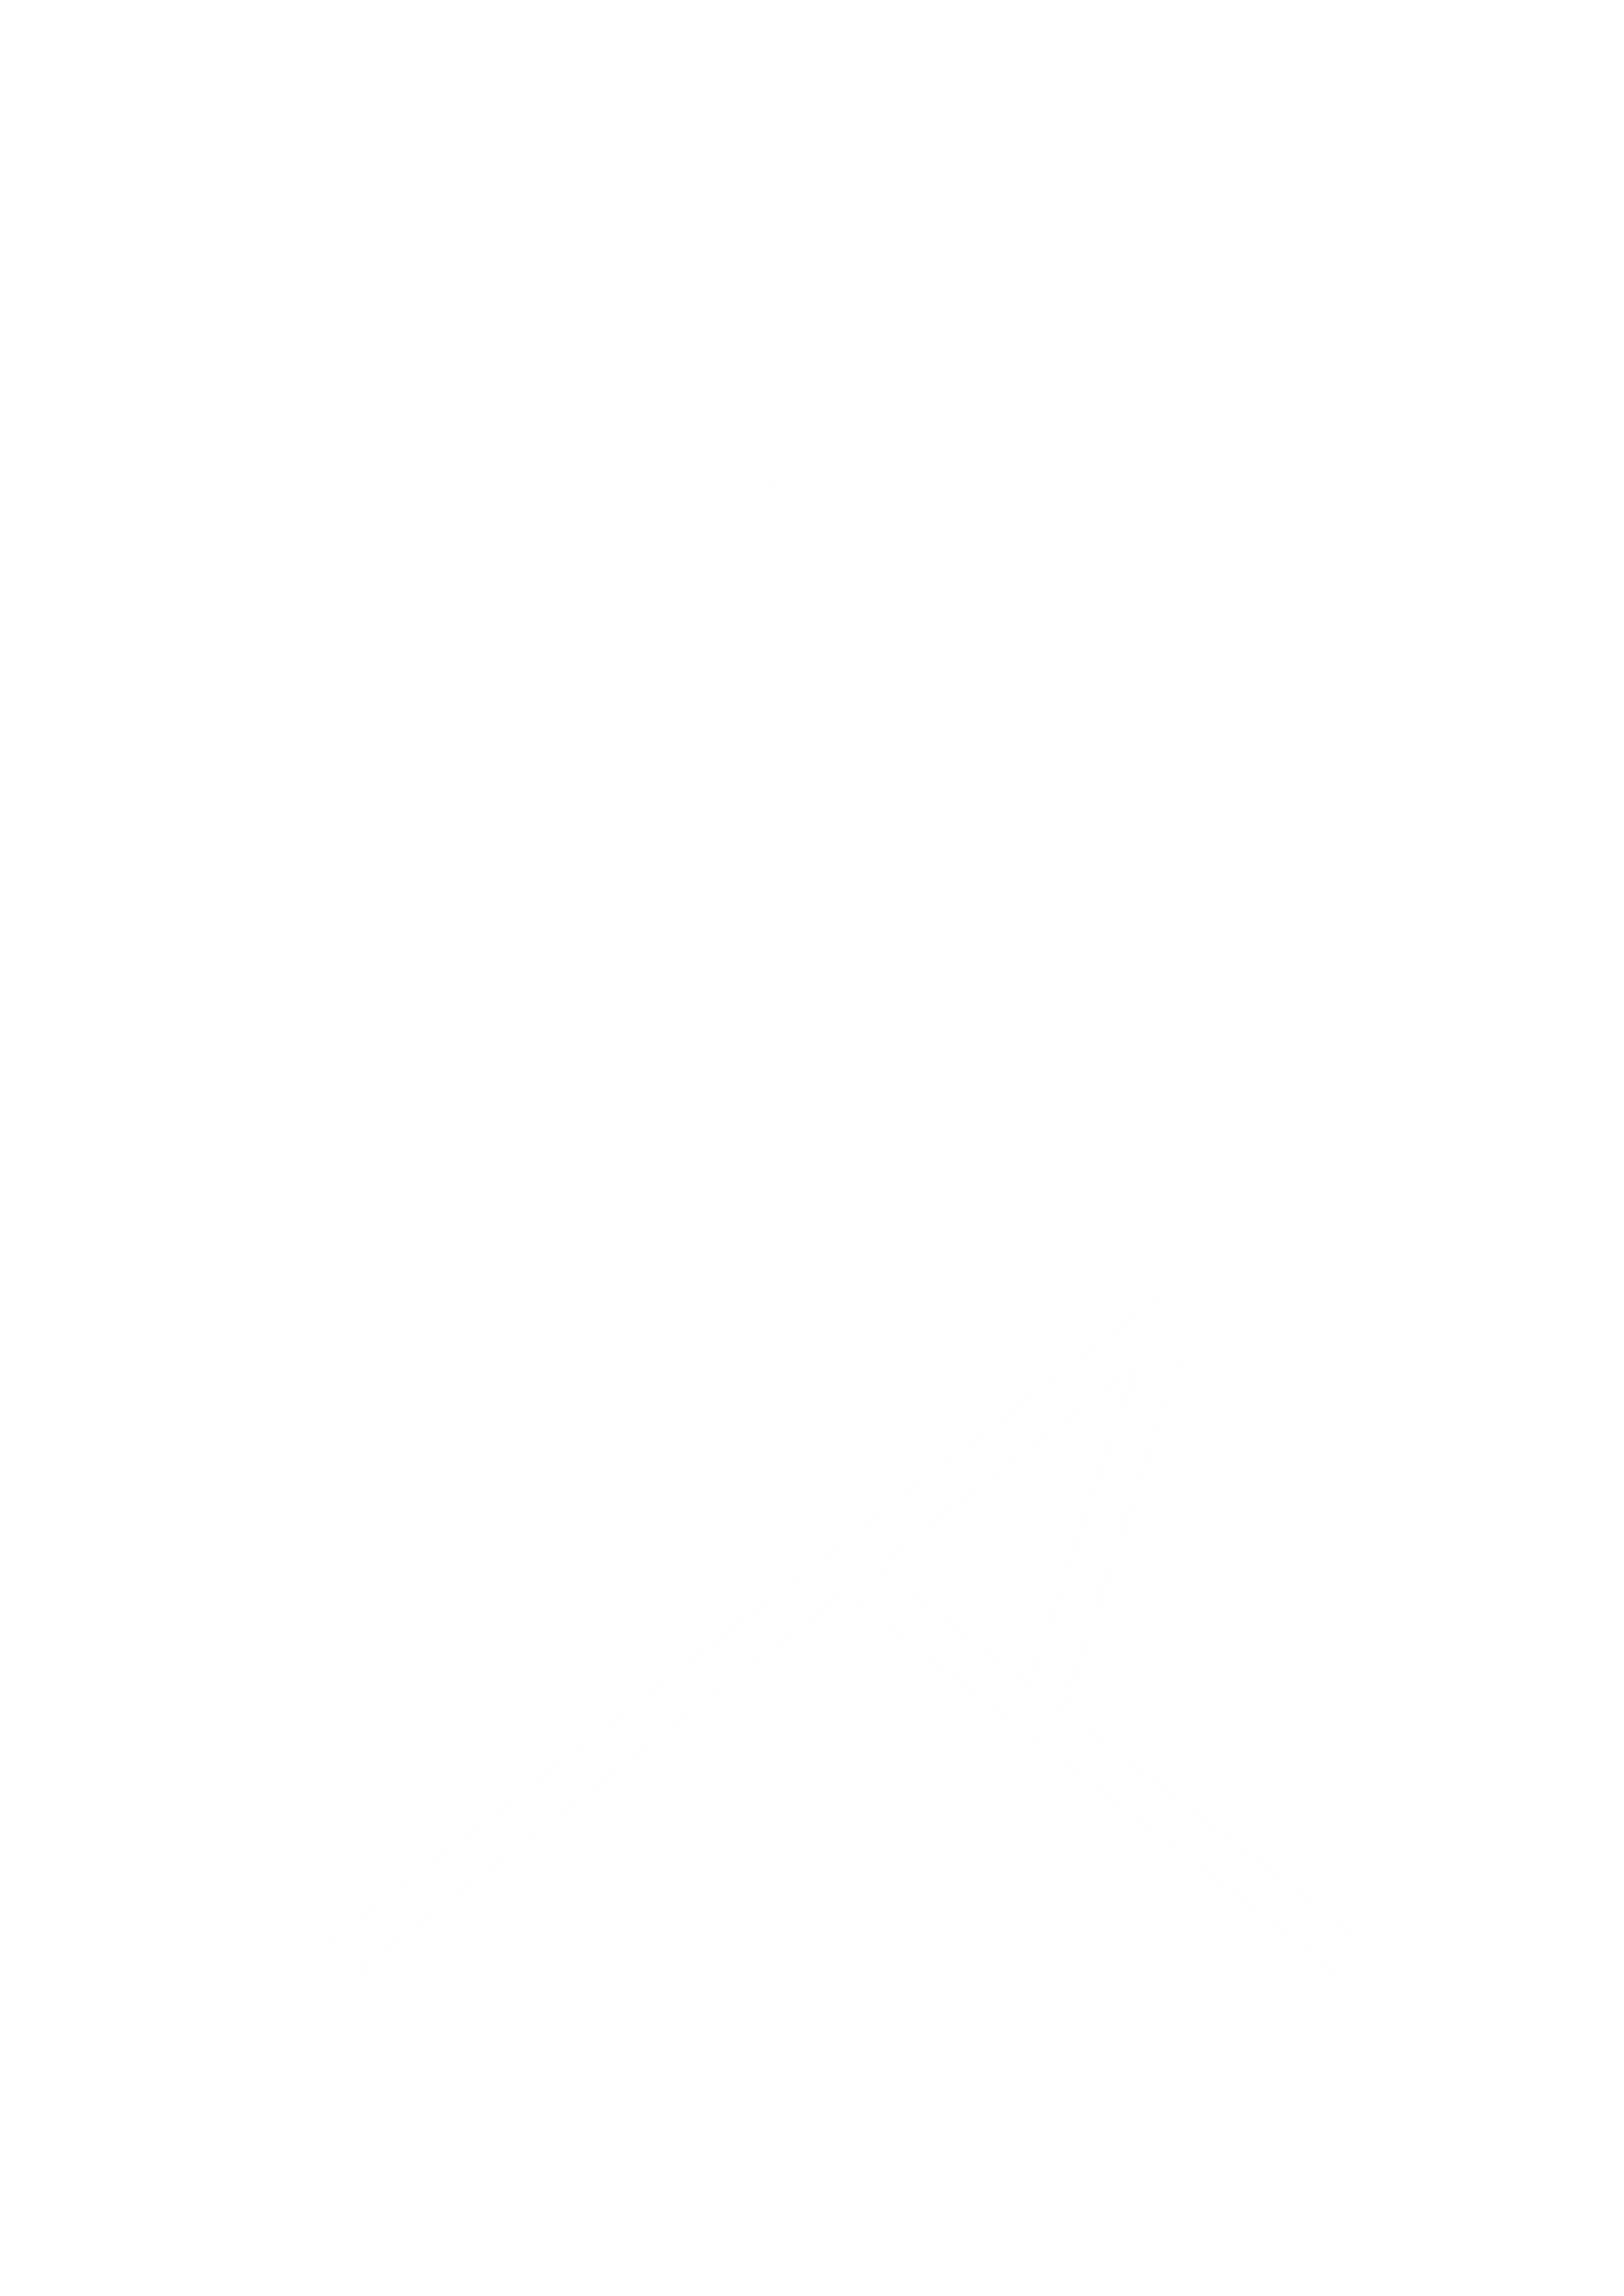 untangle logo